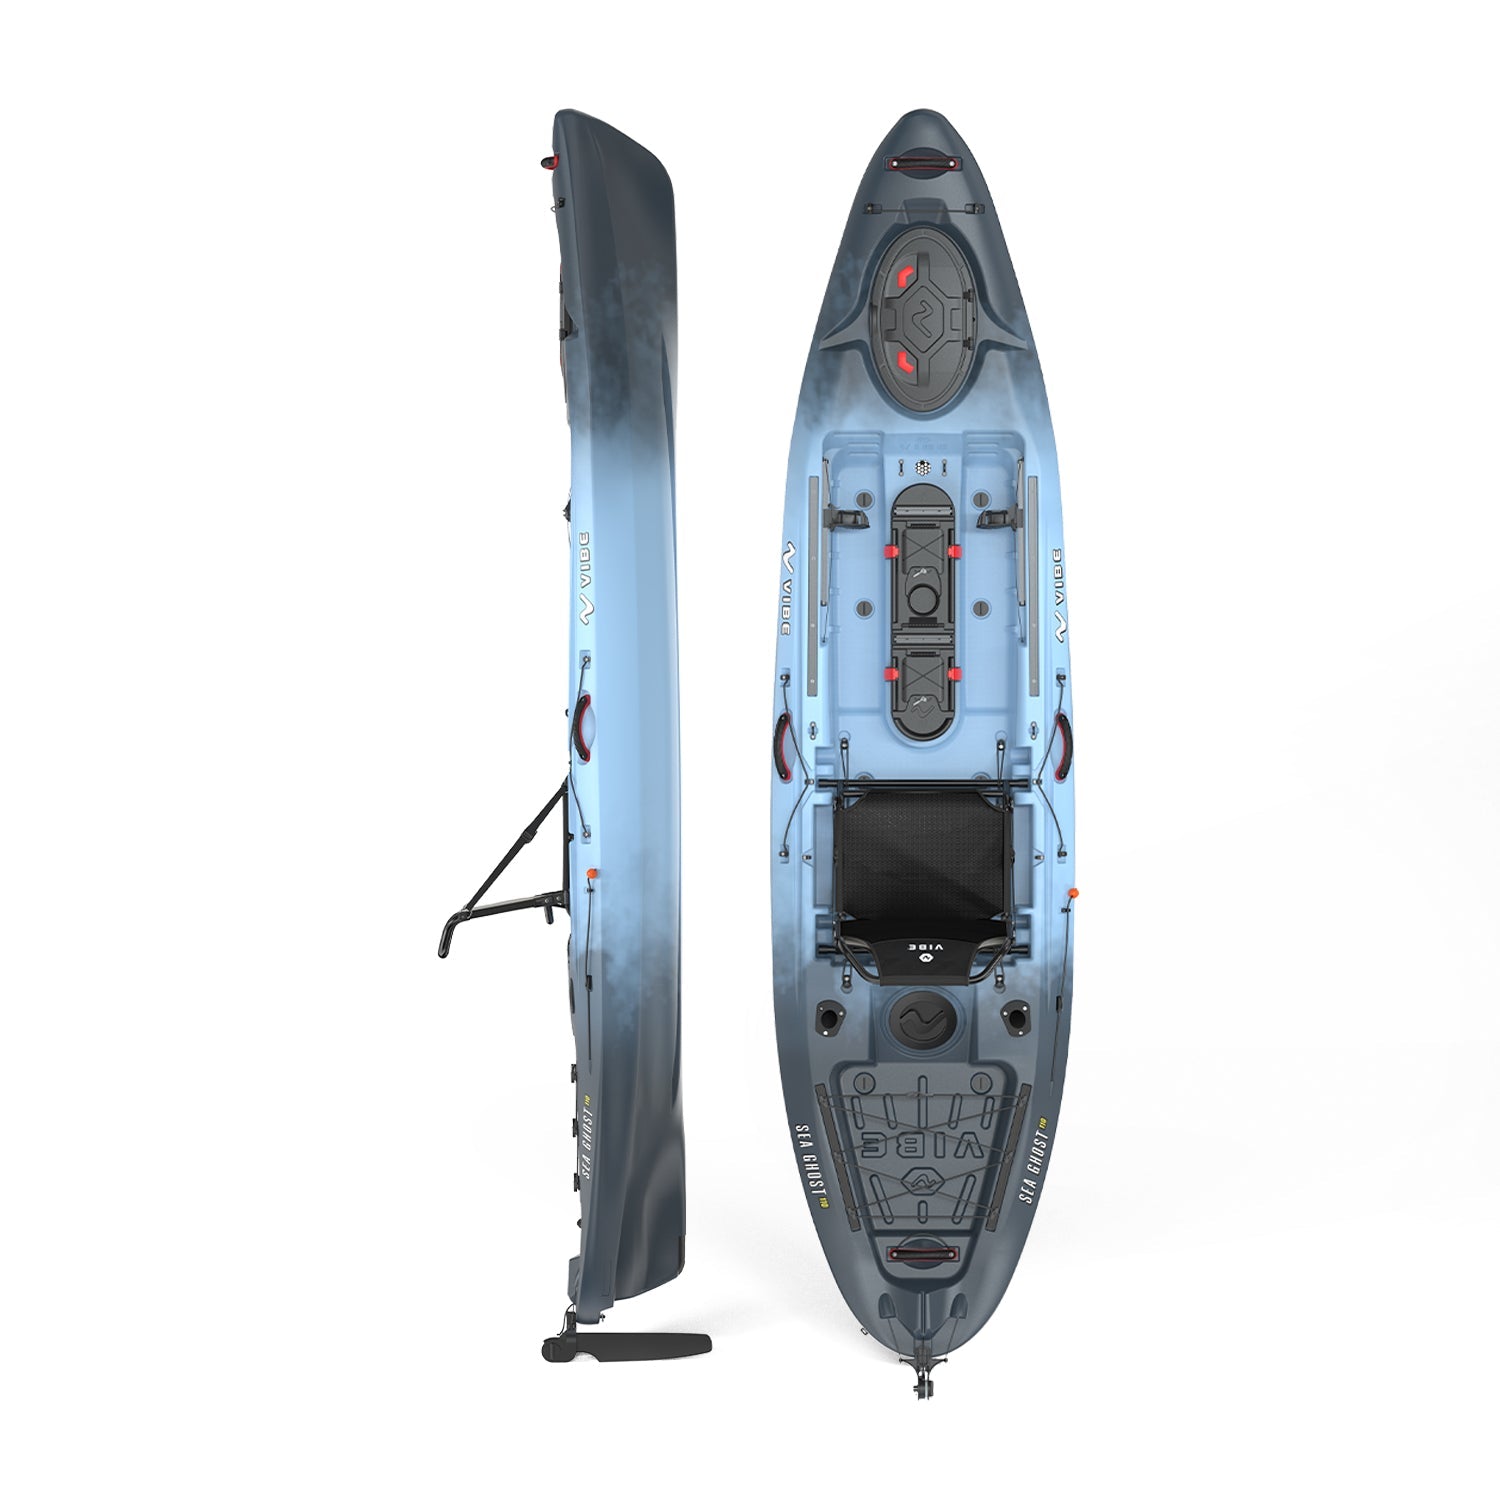 Sea Ghost 110 - Vibe Kayaks